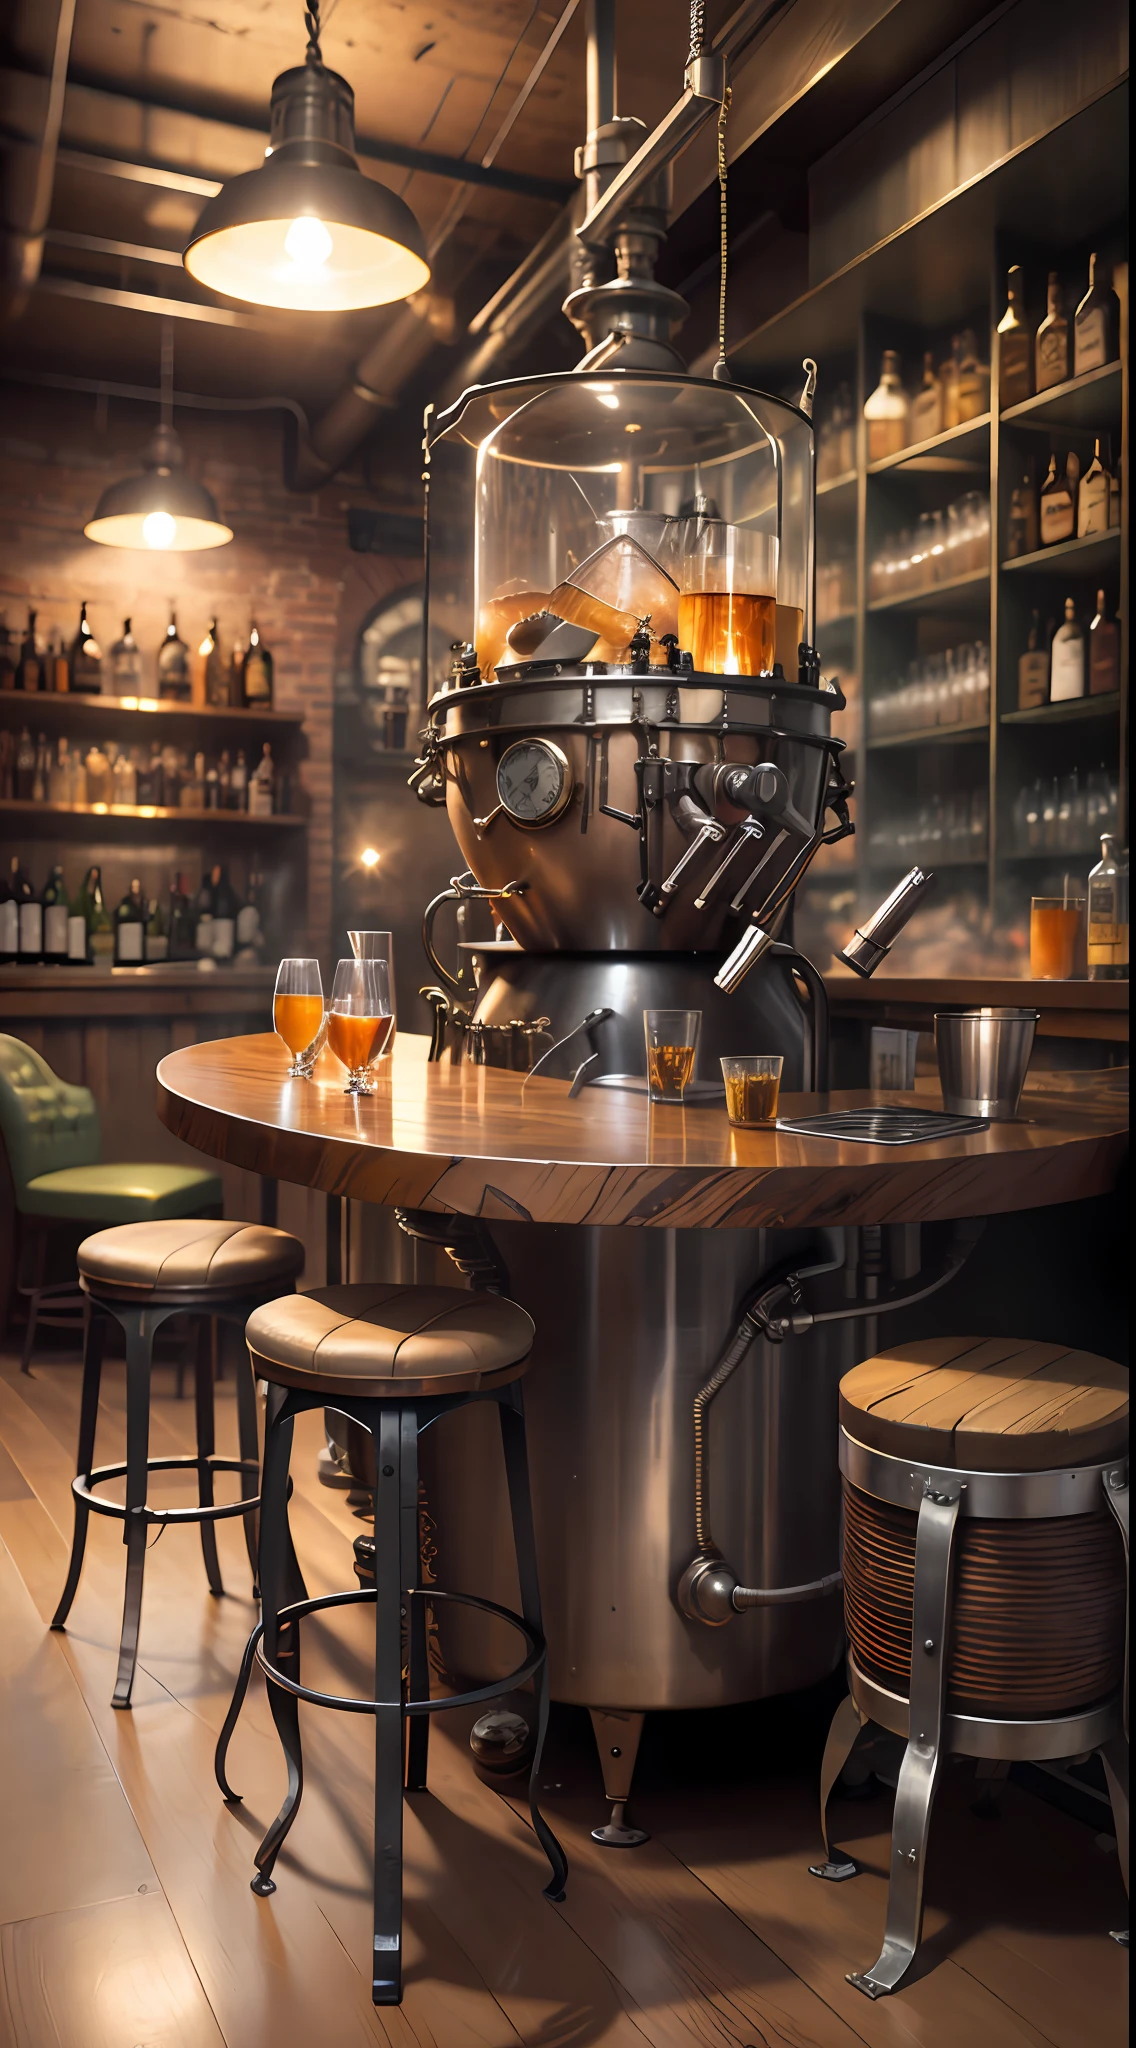 masterpiece, incredible liquor distiller artifact, Moonshine whiskey machine, intricate, realistic, steampunk, clandestine bar, mixology.